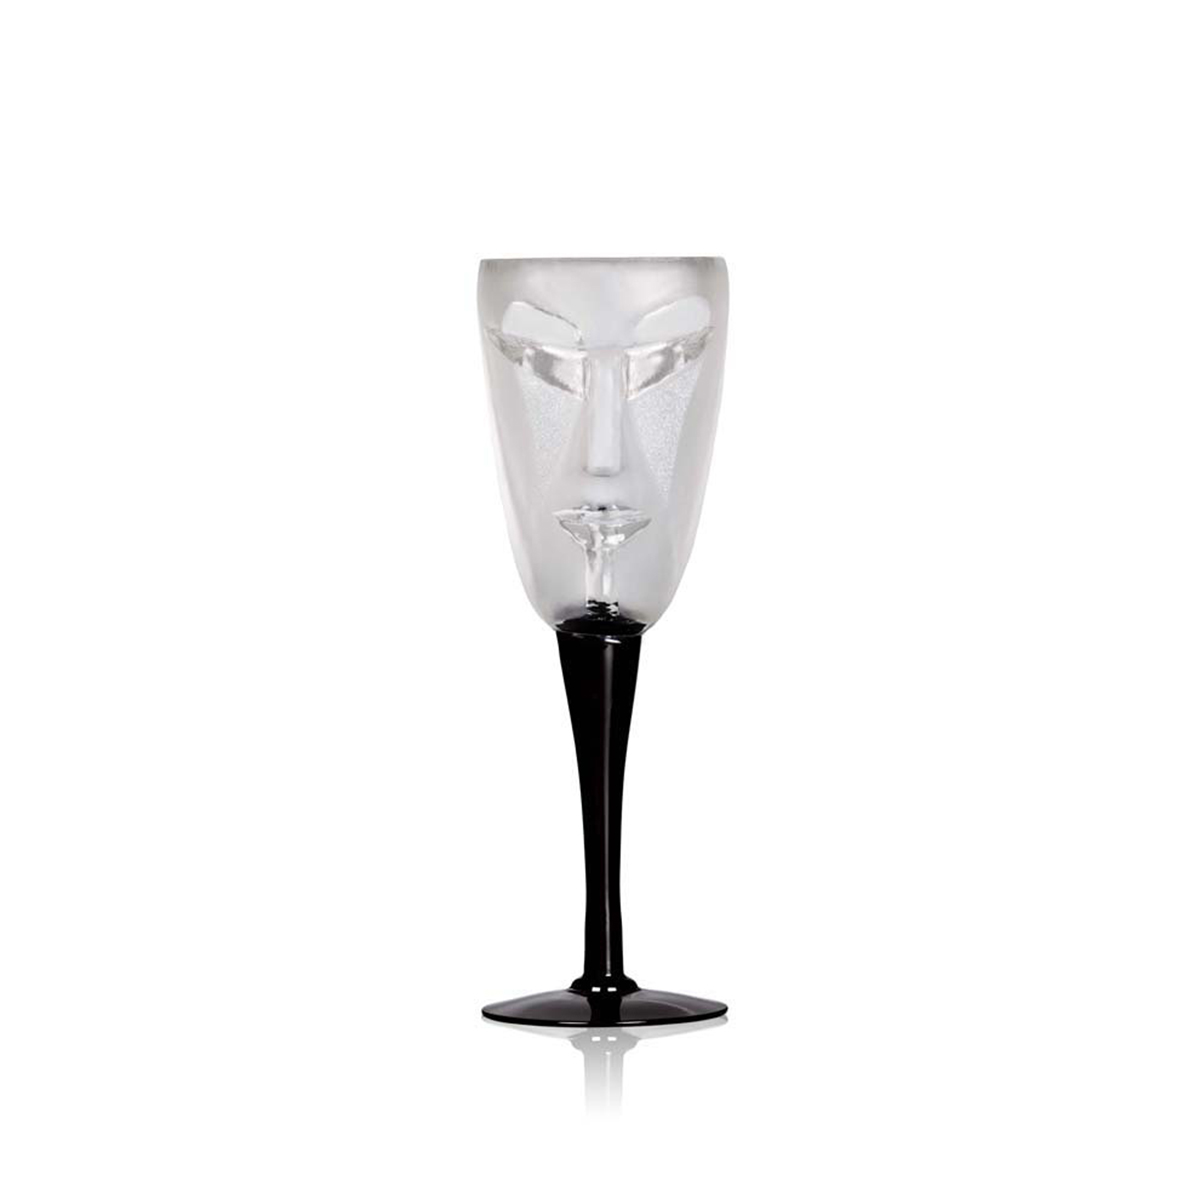  Kubik Wine Glass Kubik Series Red Wine Cup High Leg White Wine Cup Art Gift